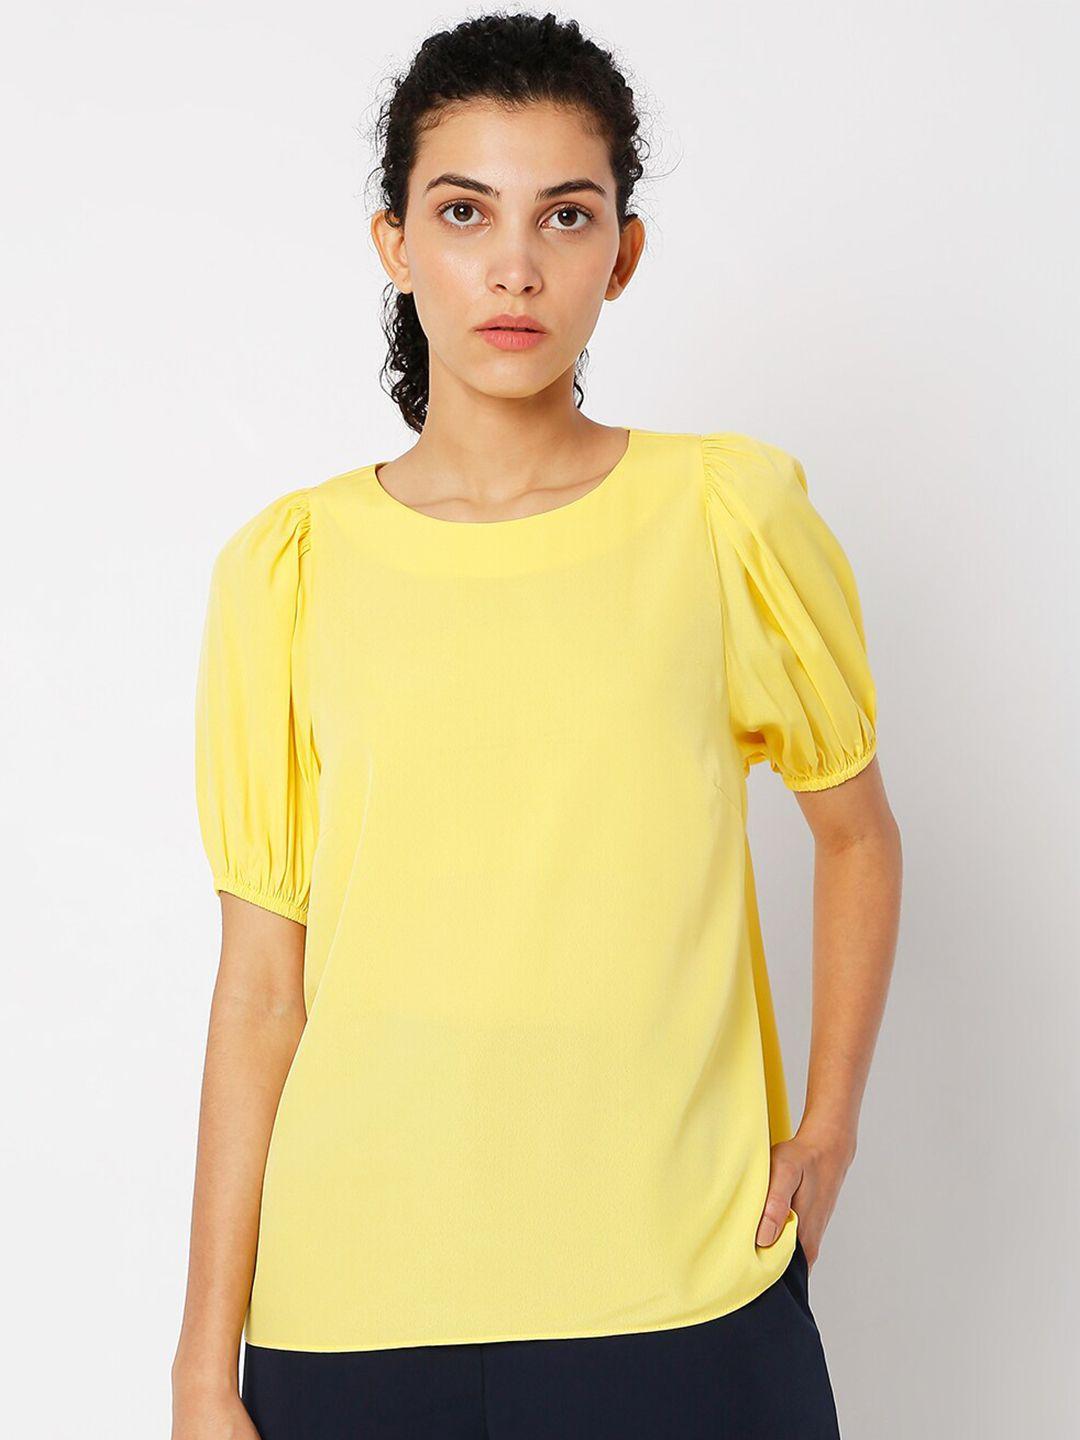 vero-moda-women-yellow-solid-top